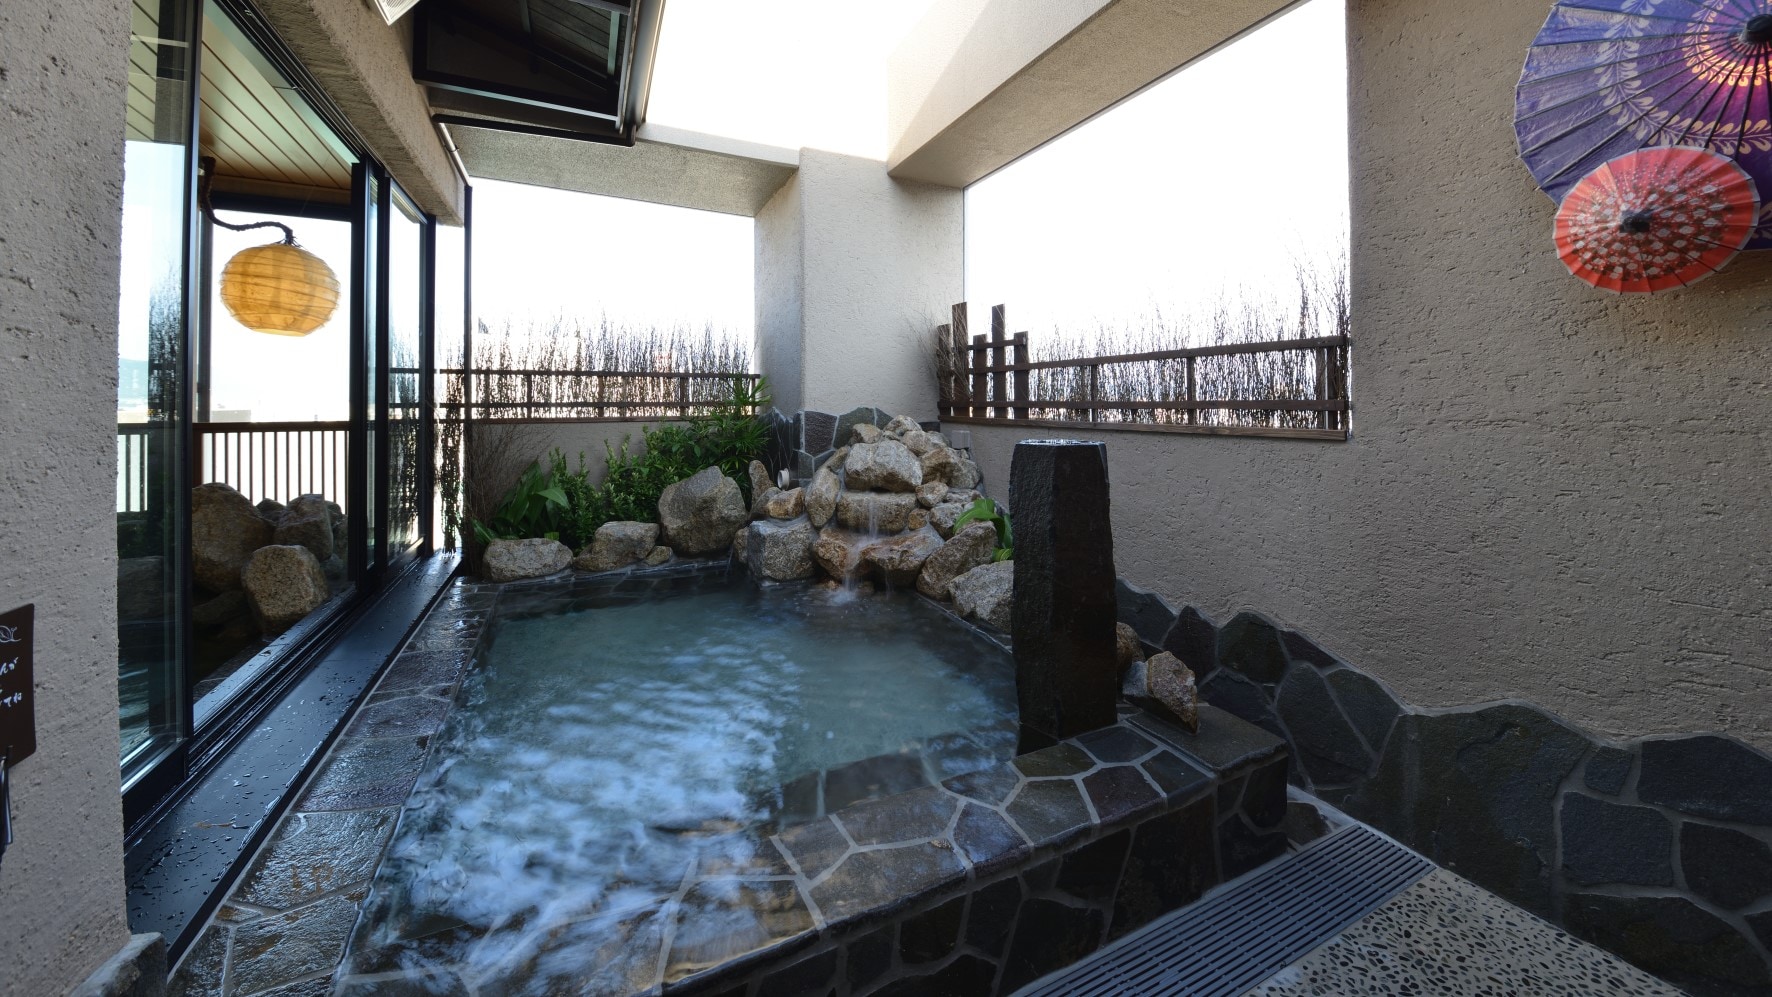 ◆ Large communal bath open-air ◆ (41-43 ℃)